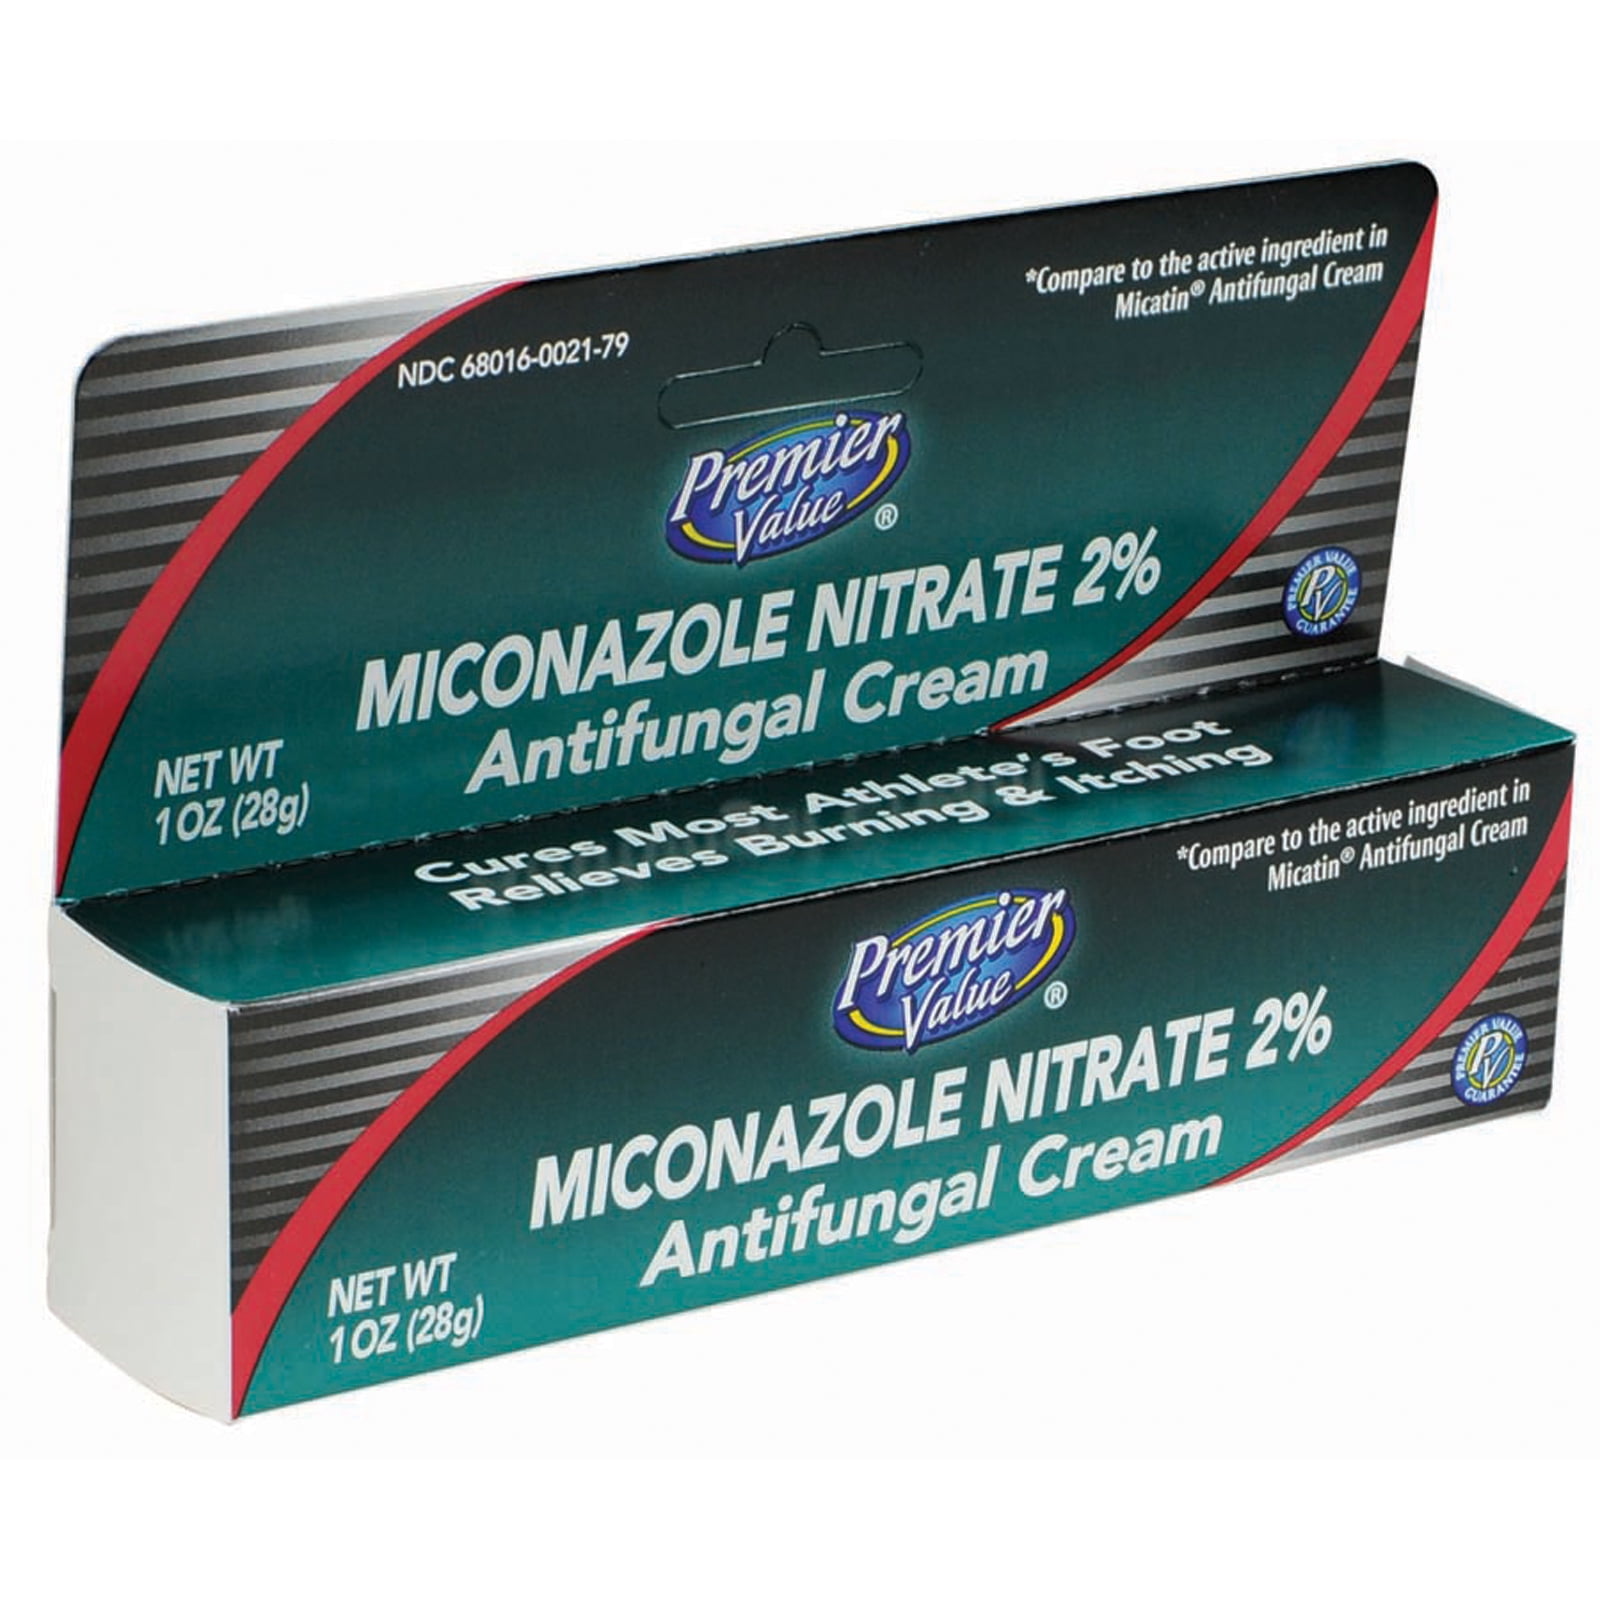 miconazole nitrate 2 antifungal cream